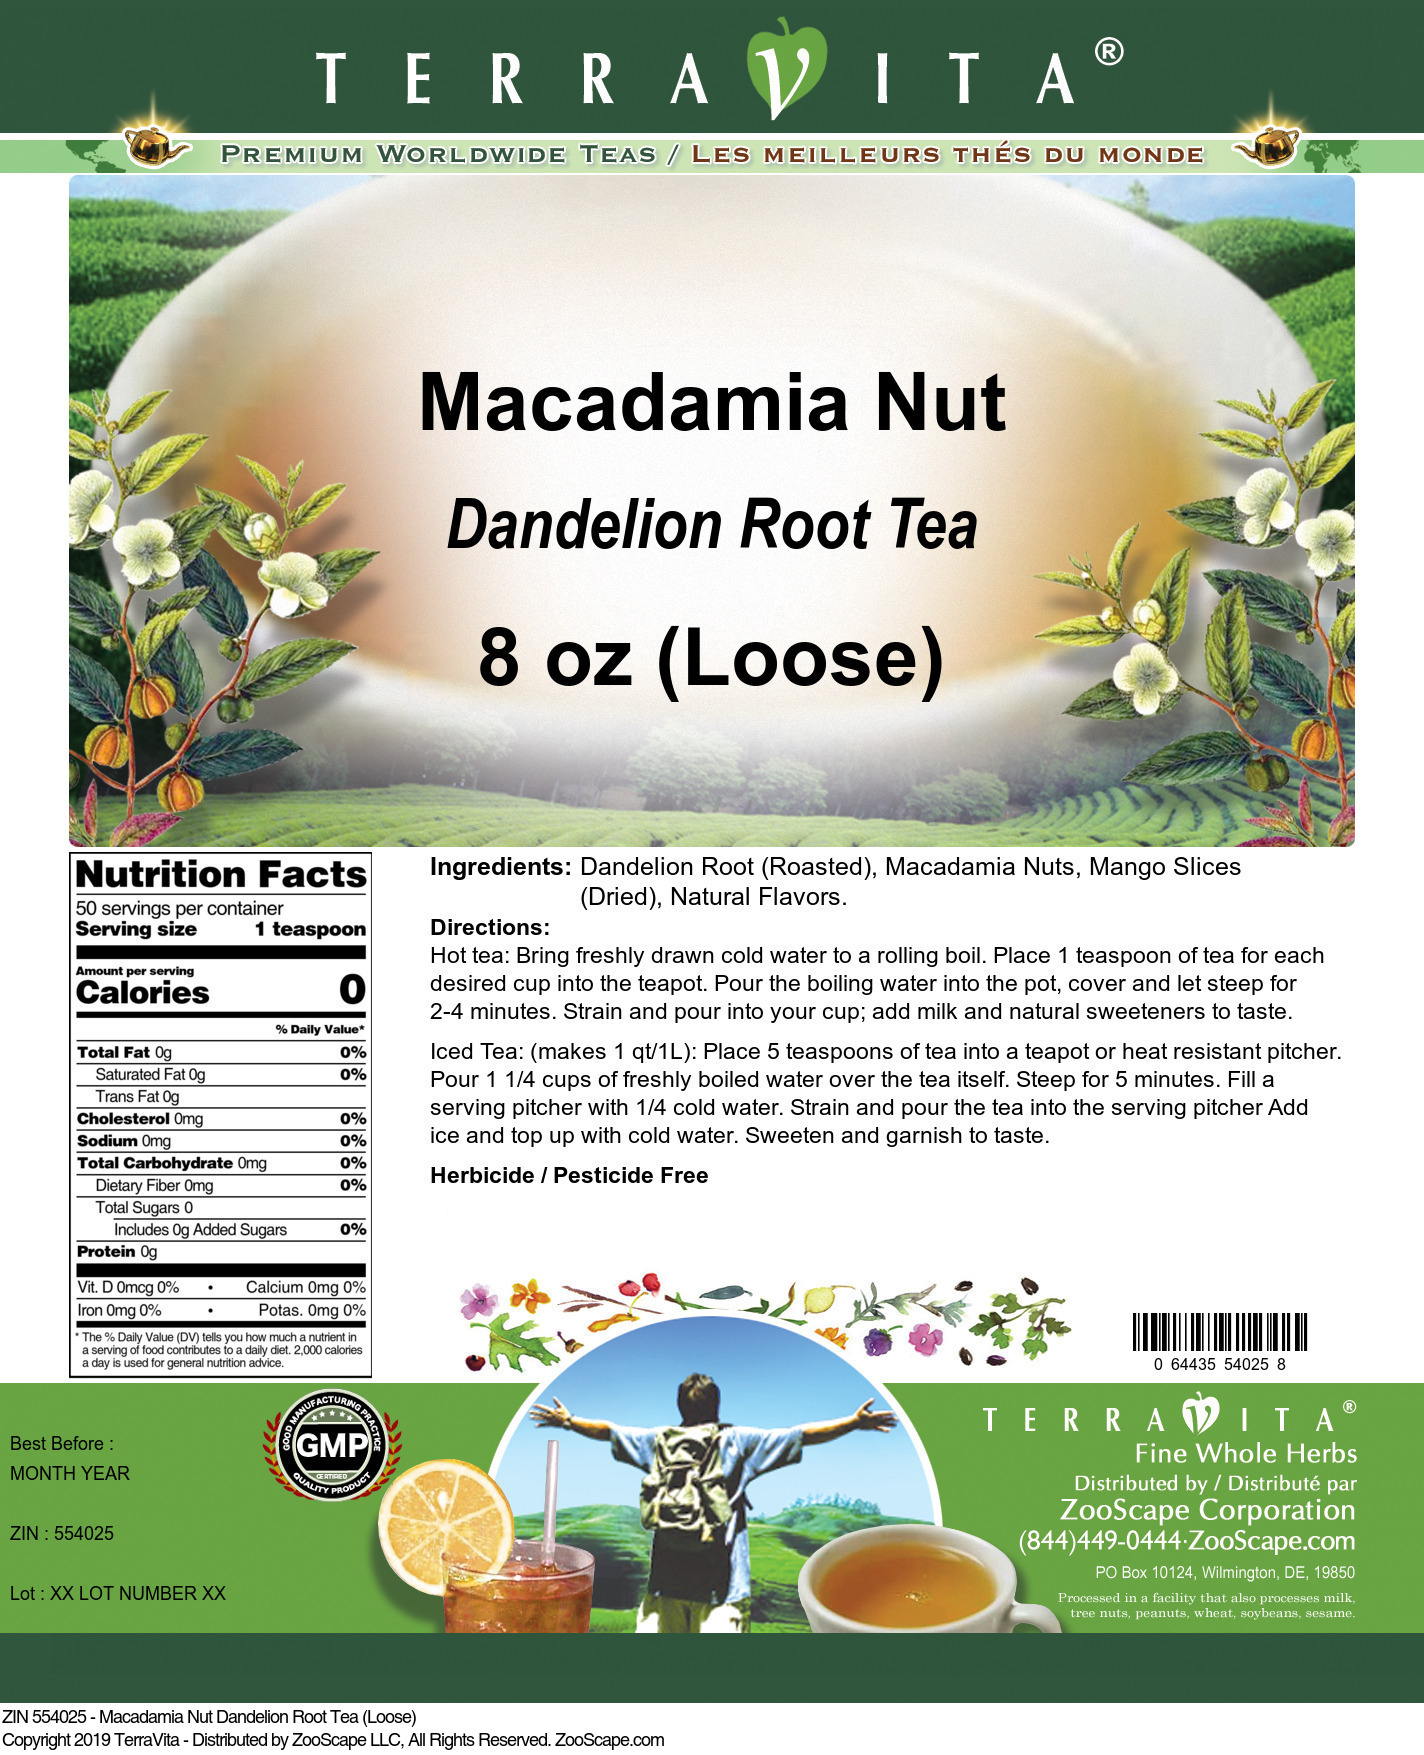 Macadamia Nut Dandelion Root Tea (Loose) - Label